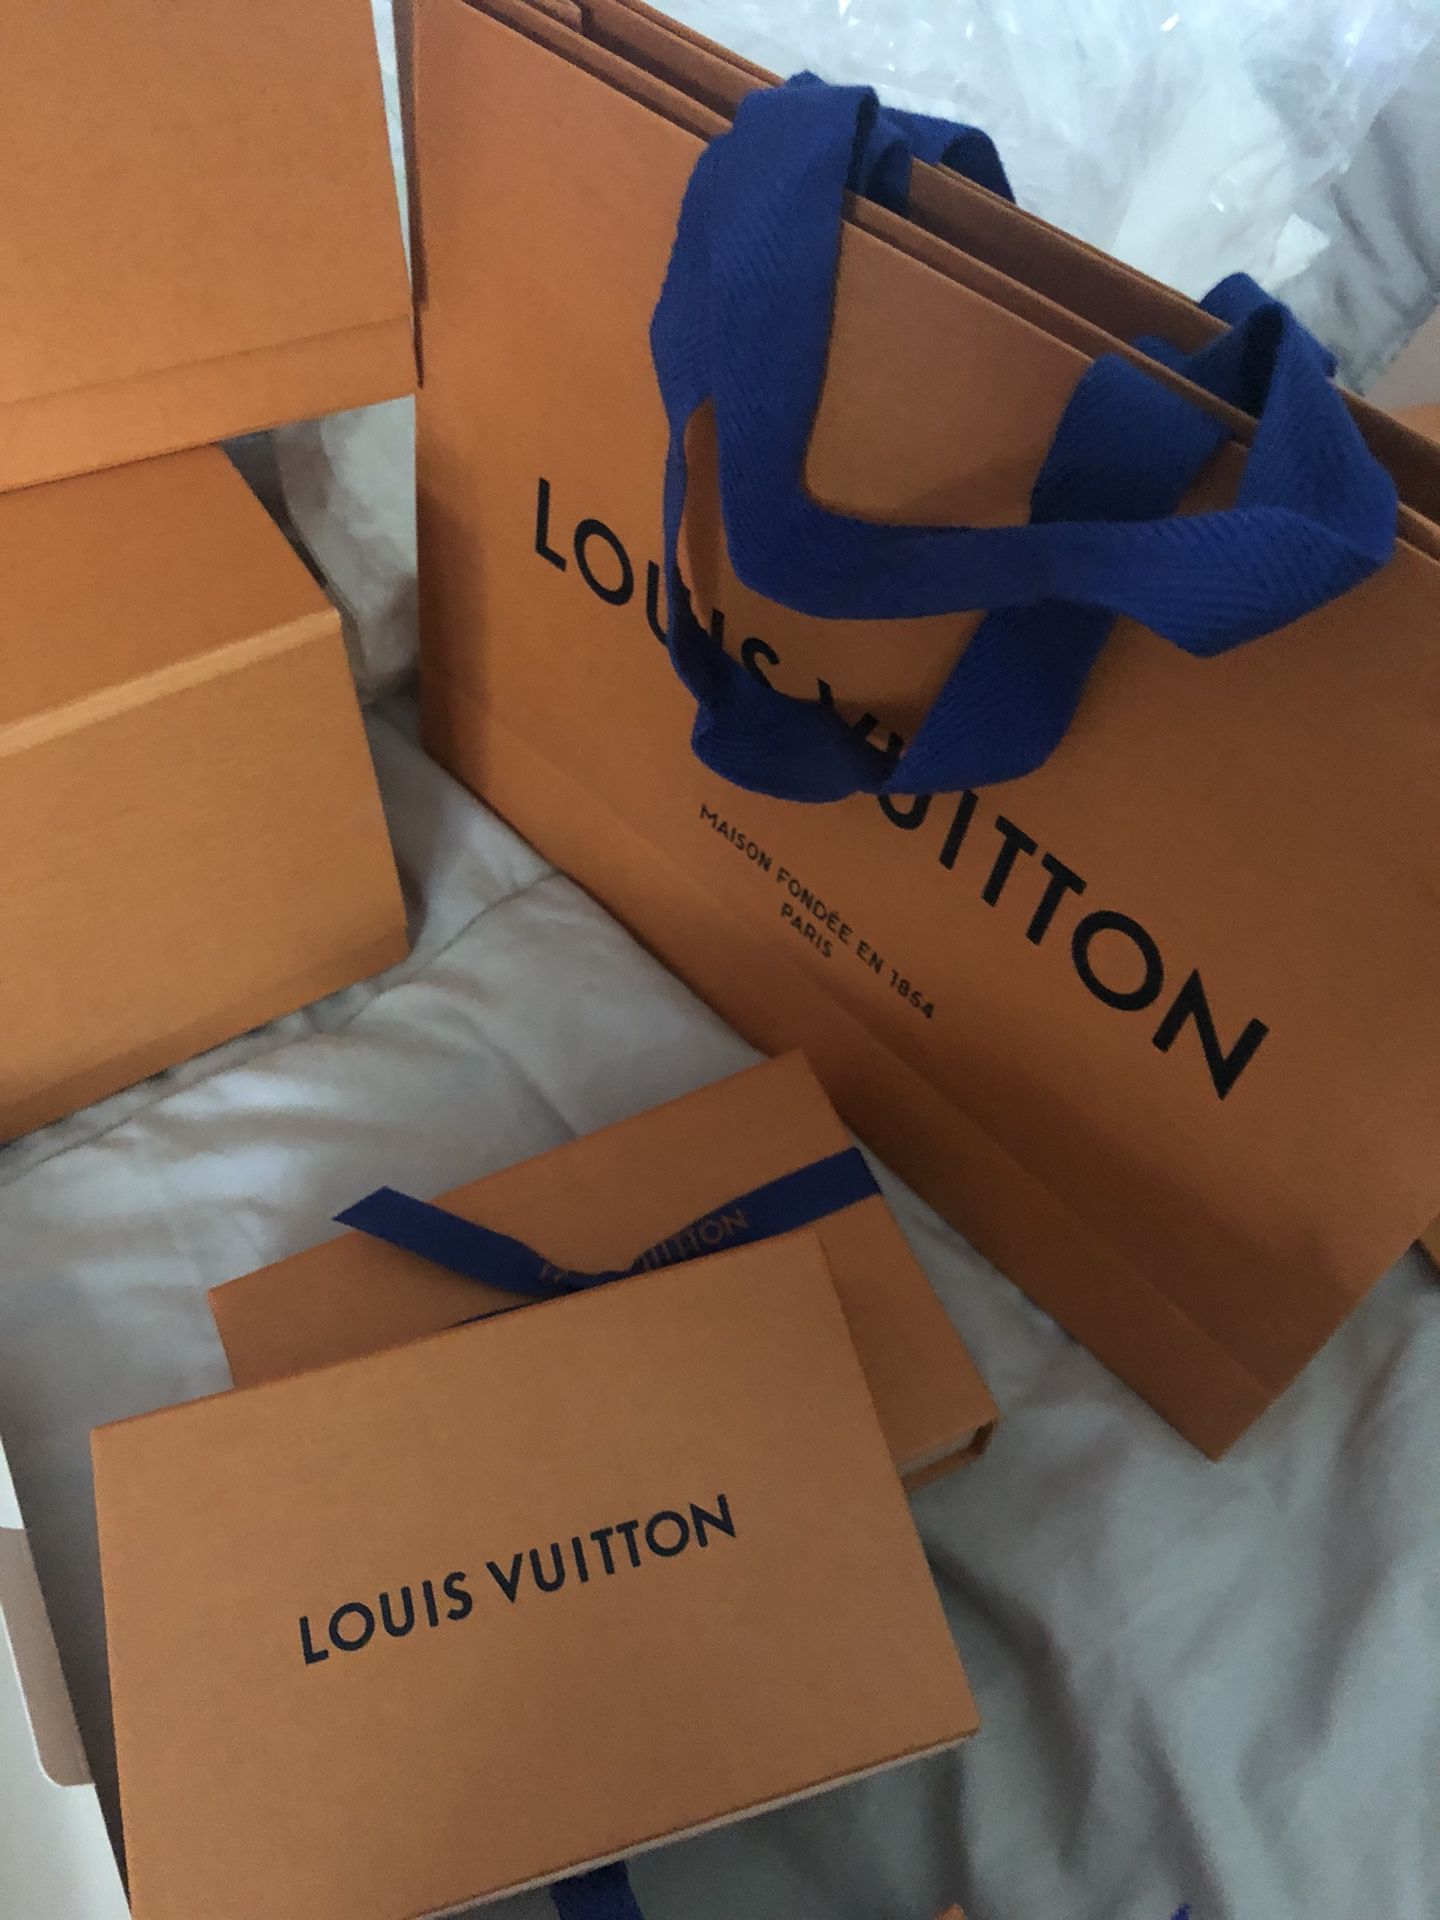 Louis Vuitton Pallas Shopper for Sale in Upland, CA - OfferUp